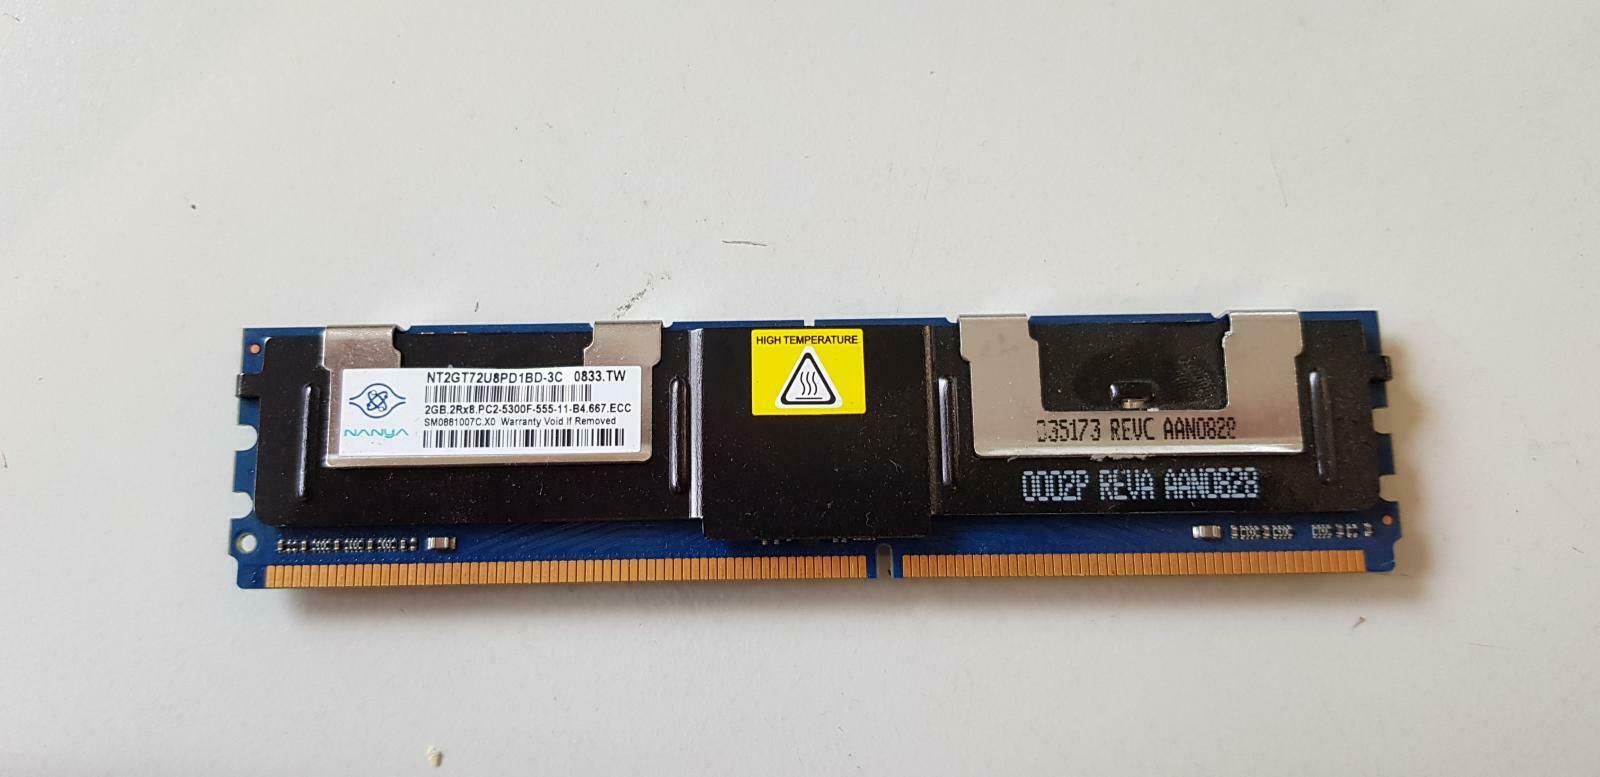 Nanya 2GB PC2-5300 DDR2-667MHz ECC Fully Buffered CL5 240-Pin DIMM ( NT2GT72U8PD1BD-3C ) REF